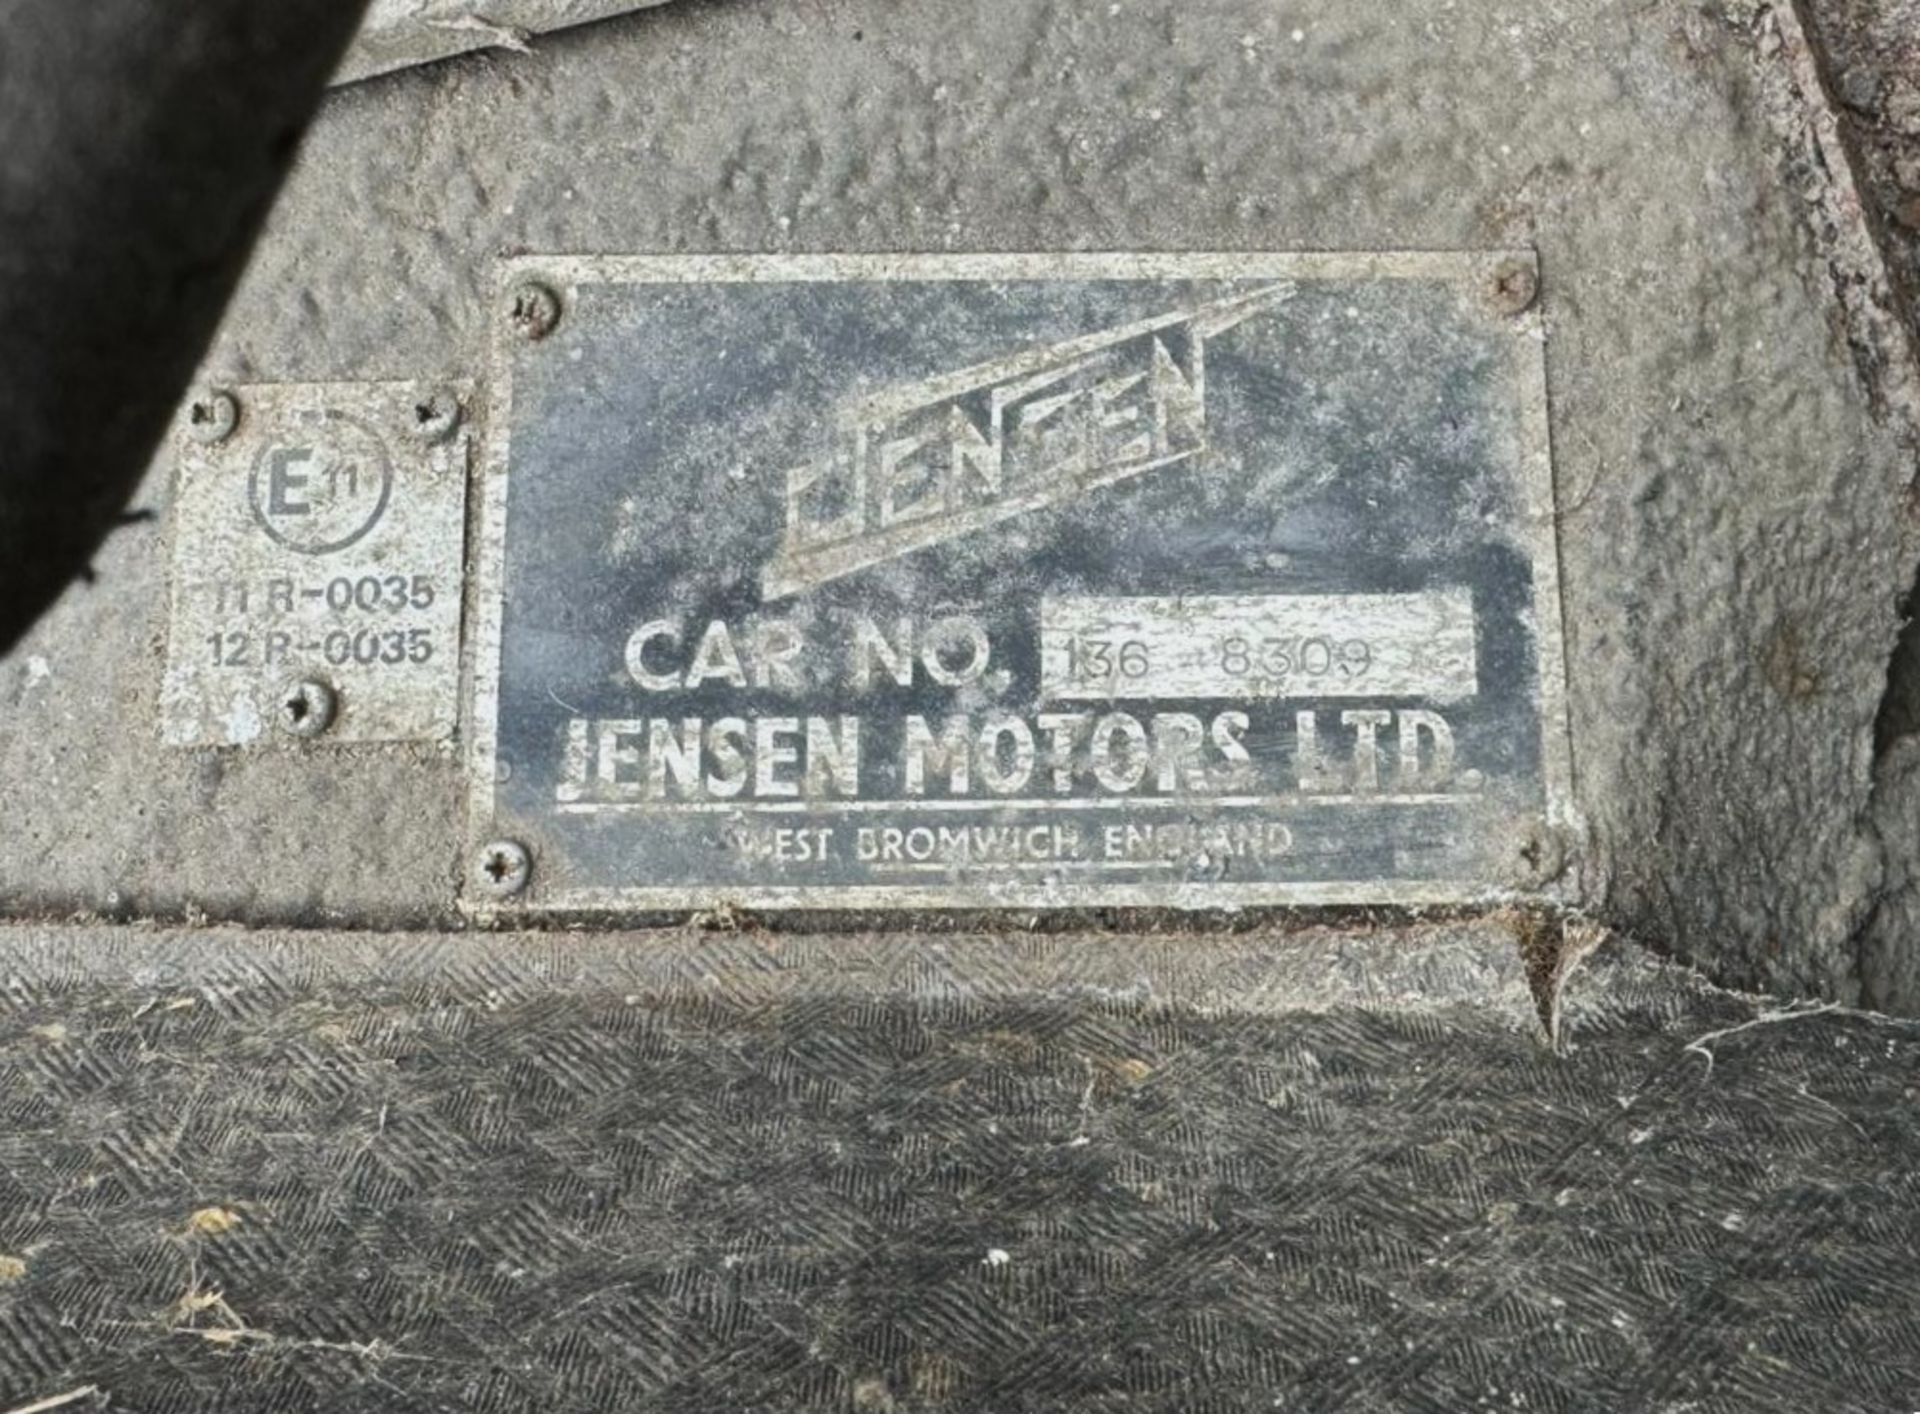 1973 JENSEN INTERCEPTOR SERIES III Registration Number: DDL 105L Chassis Number: 136-8309 Recorded - Image 21 of 22